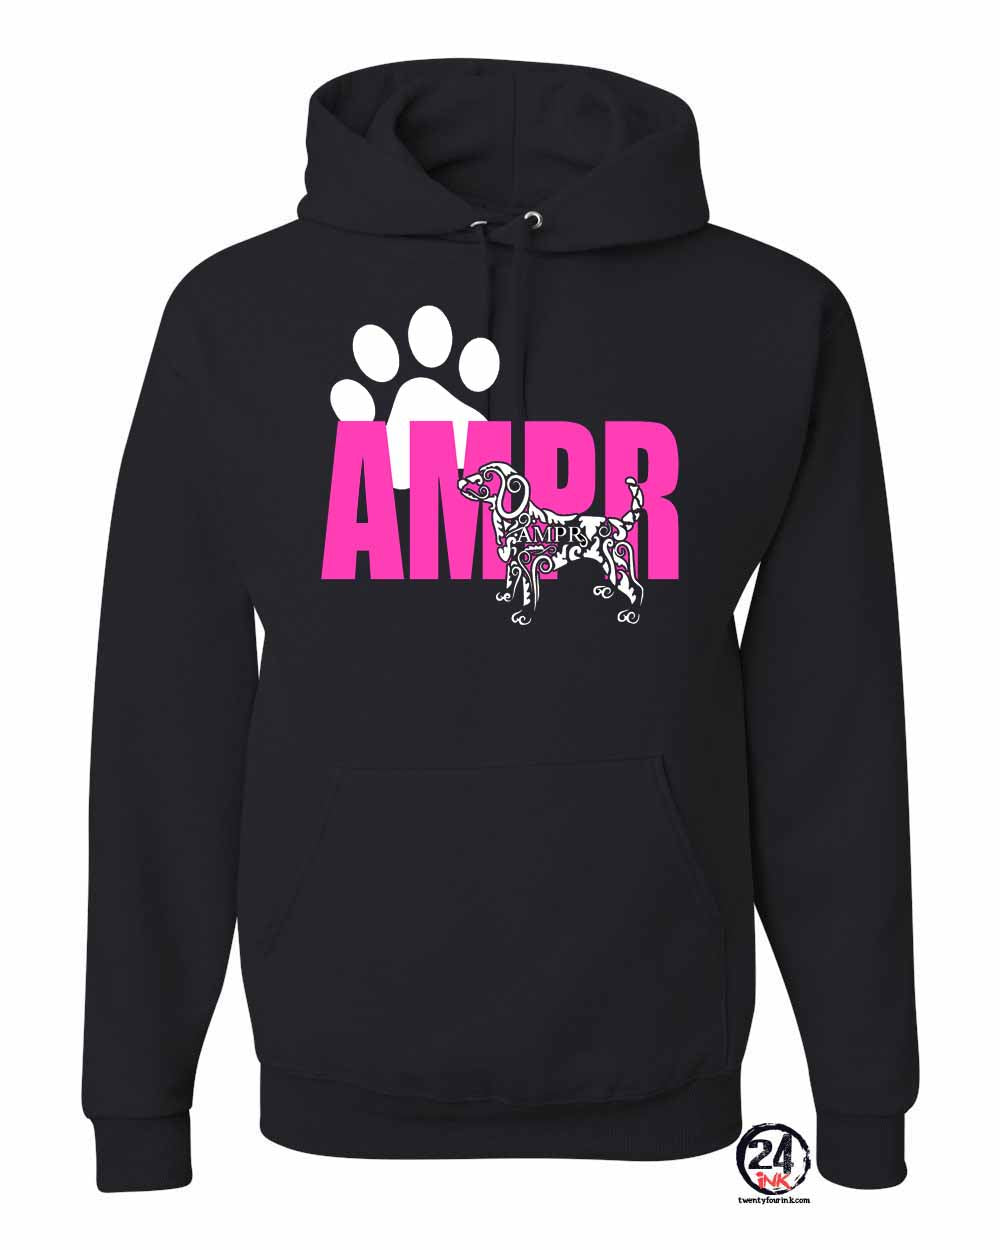 AMPR design 1 Hooded Sweatshirt